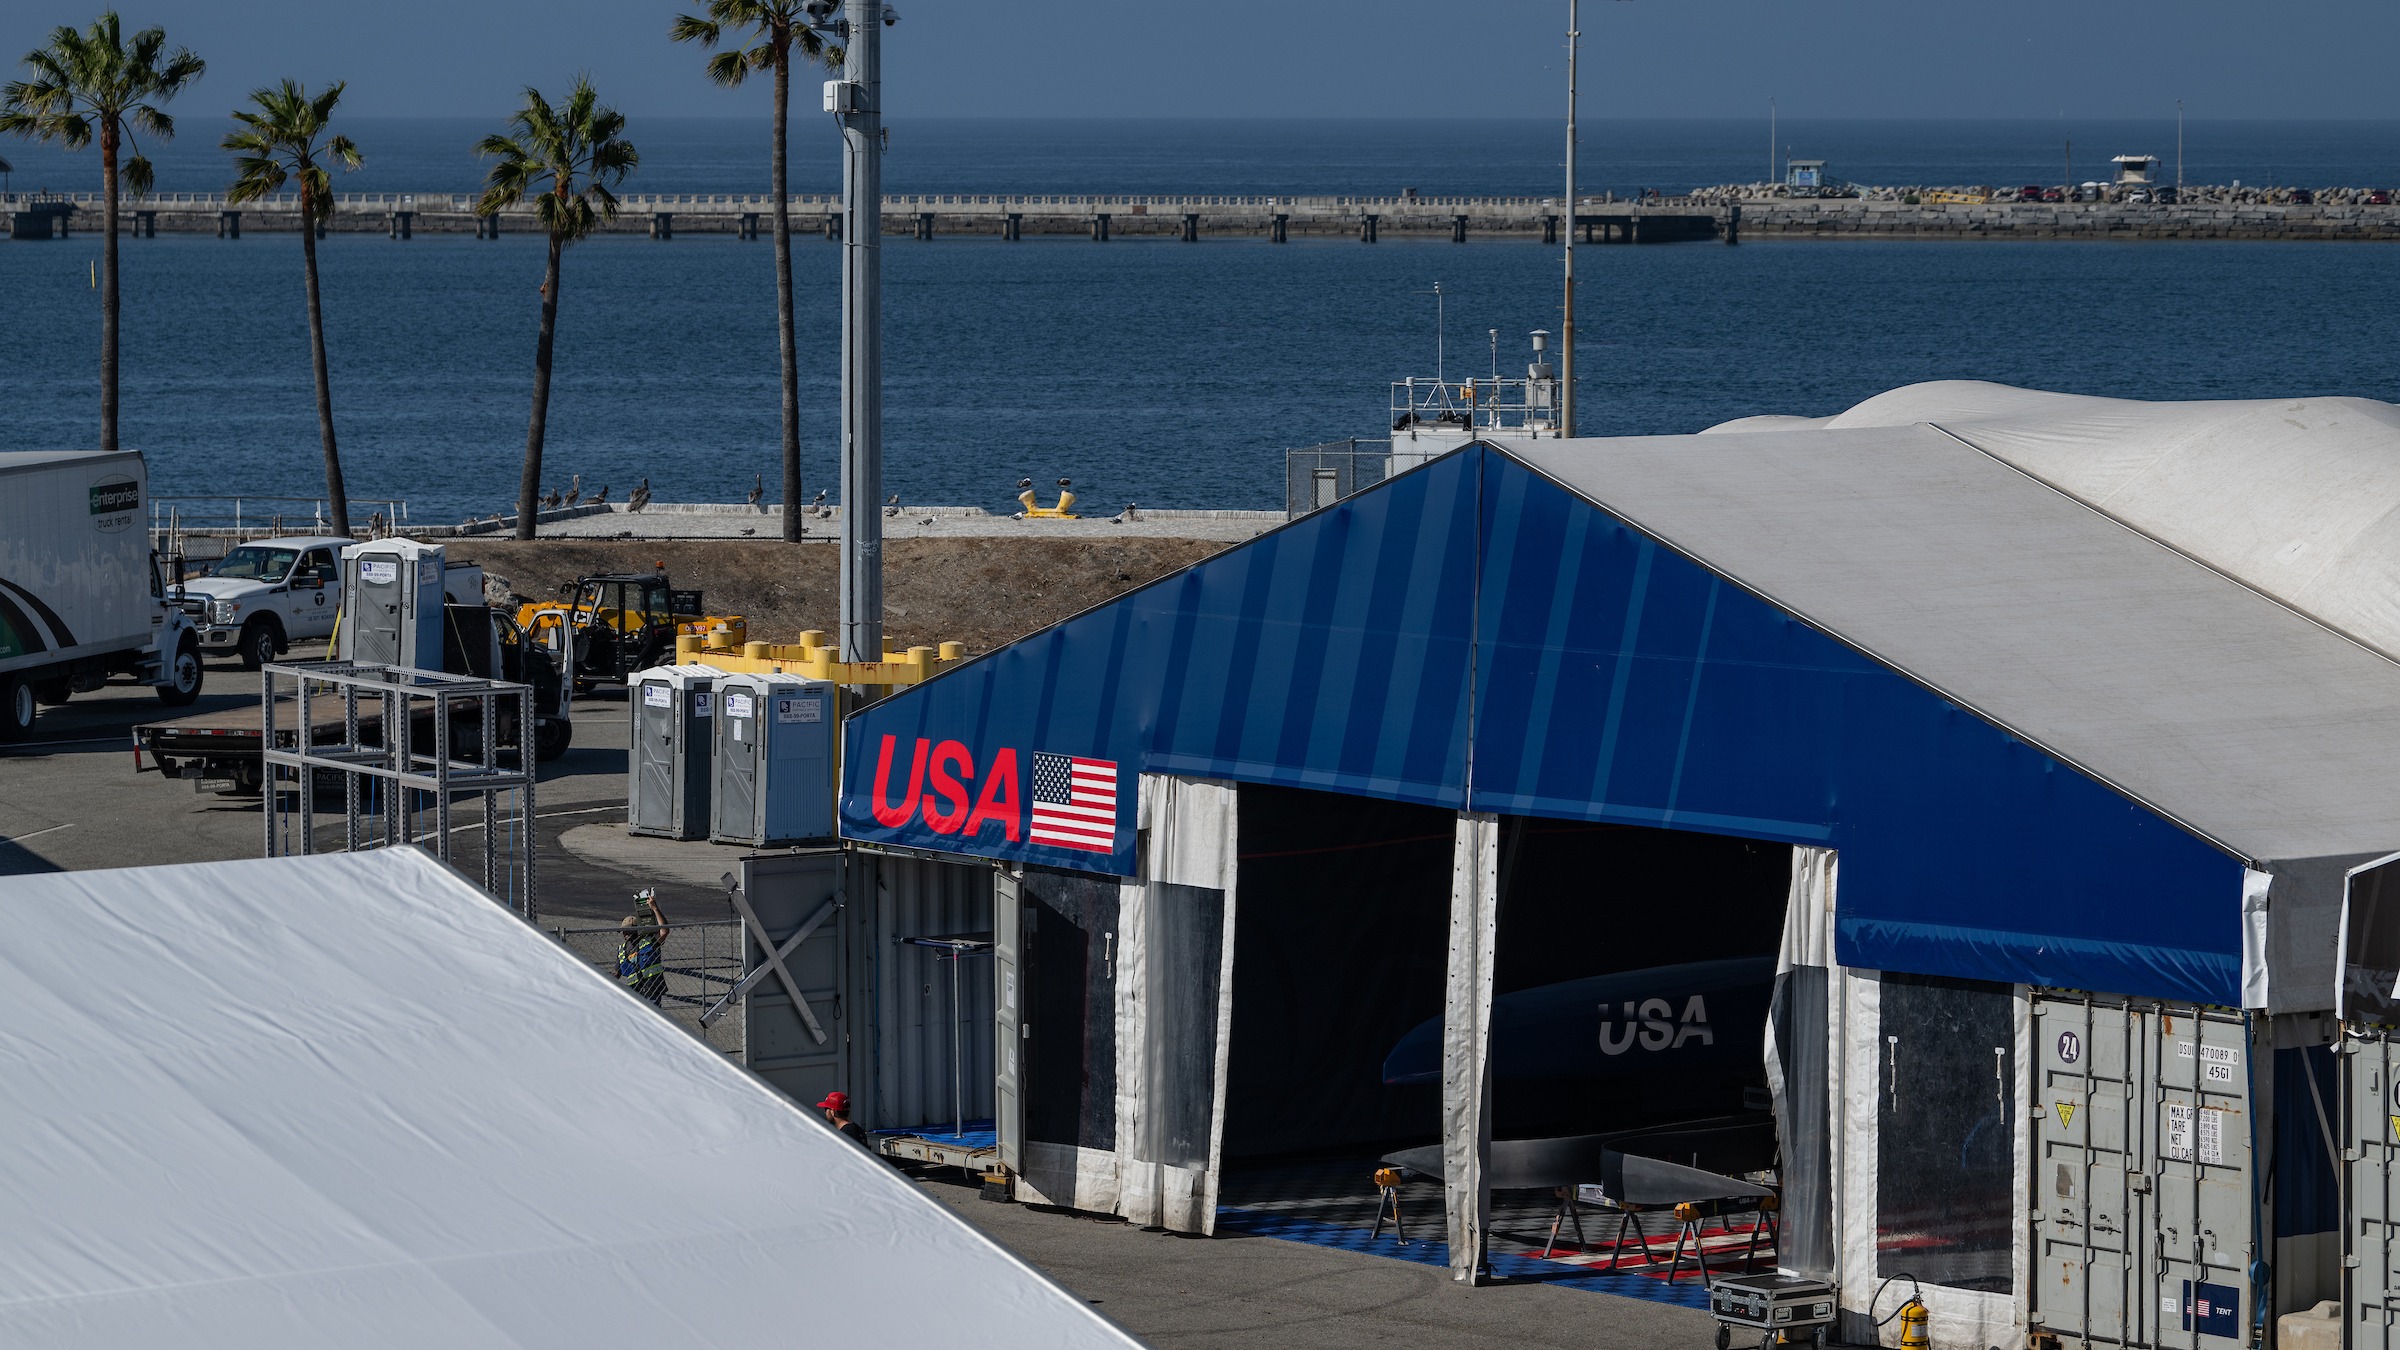 Season 4 // Los Angeles Sail Grand Prix // USA tent on tech site